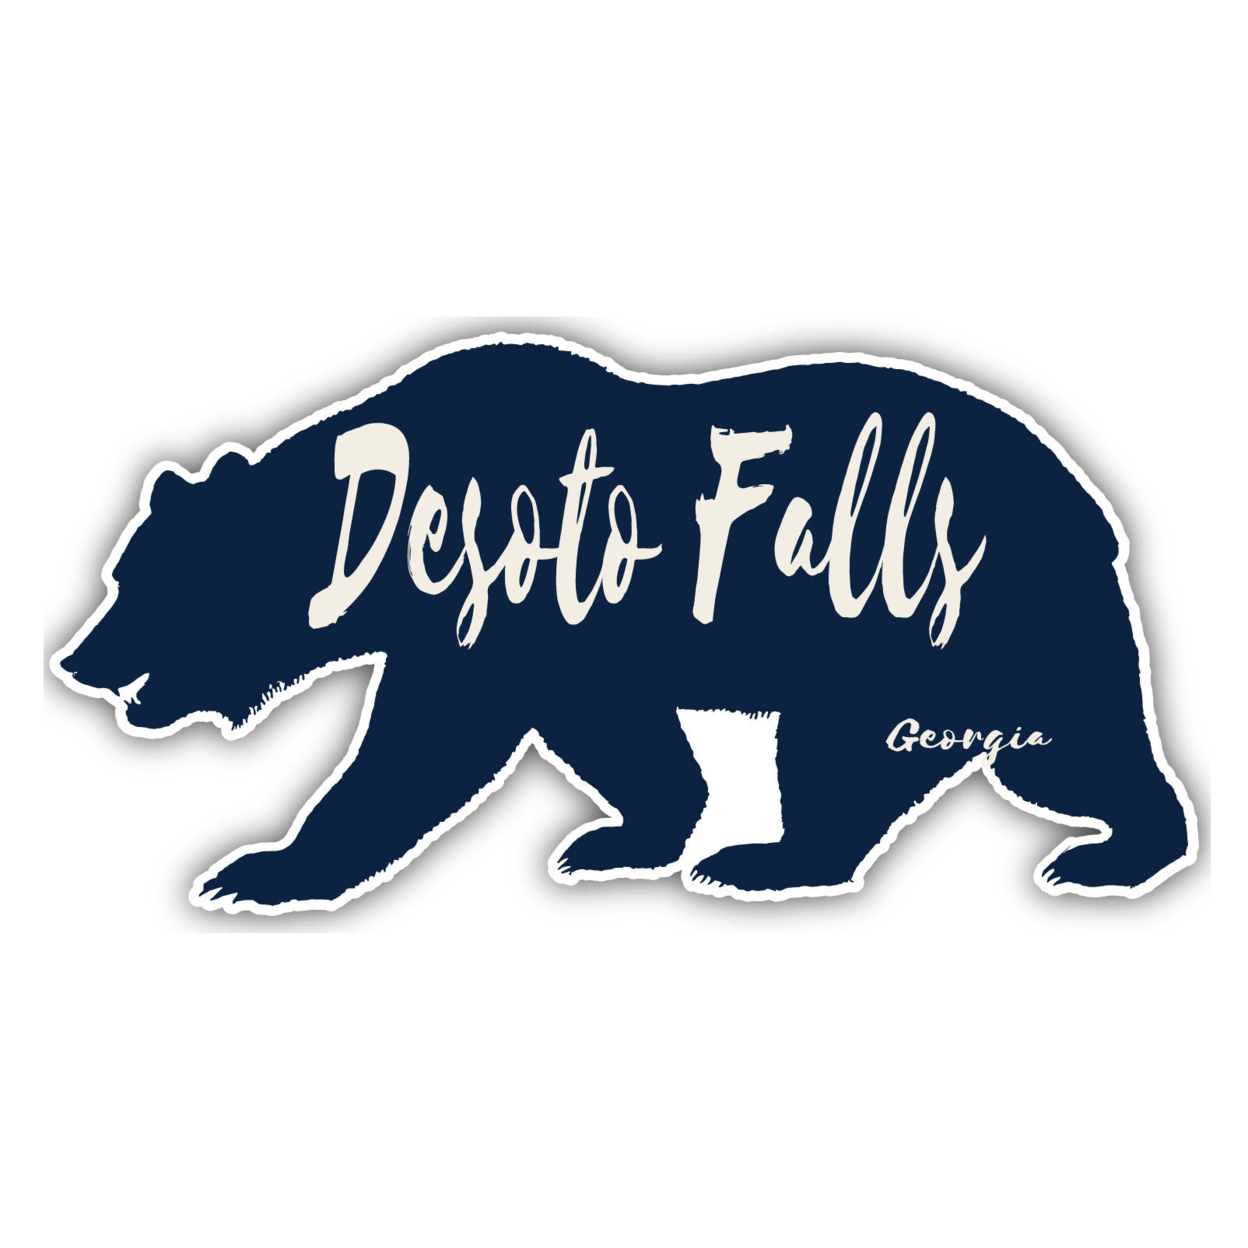 DeSoto Falls Georgia Souvenir Decorative Stickers (Choose Theme And Size) - 4-Pack, 12-Inch, Bear